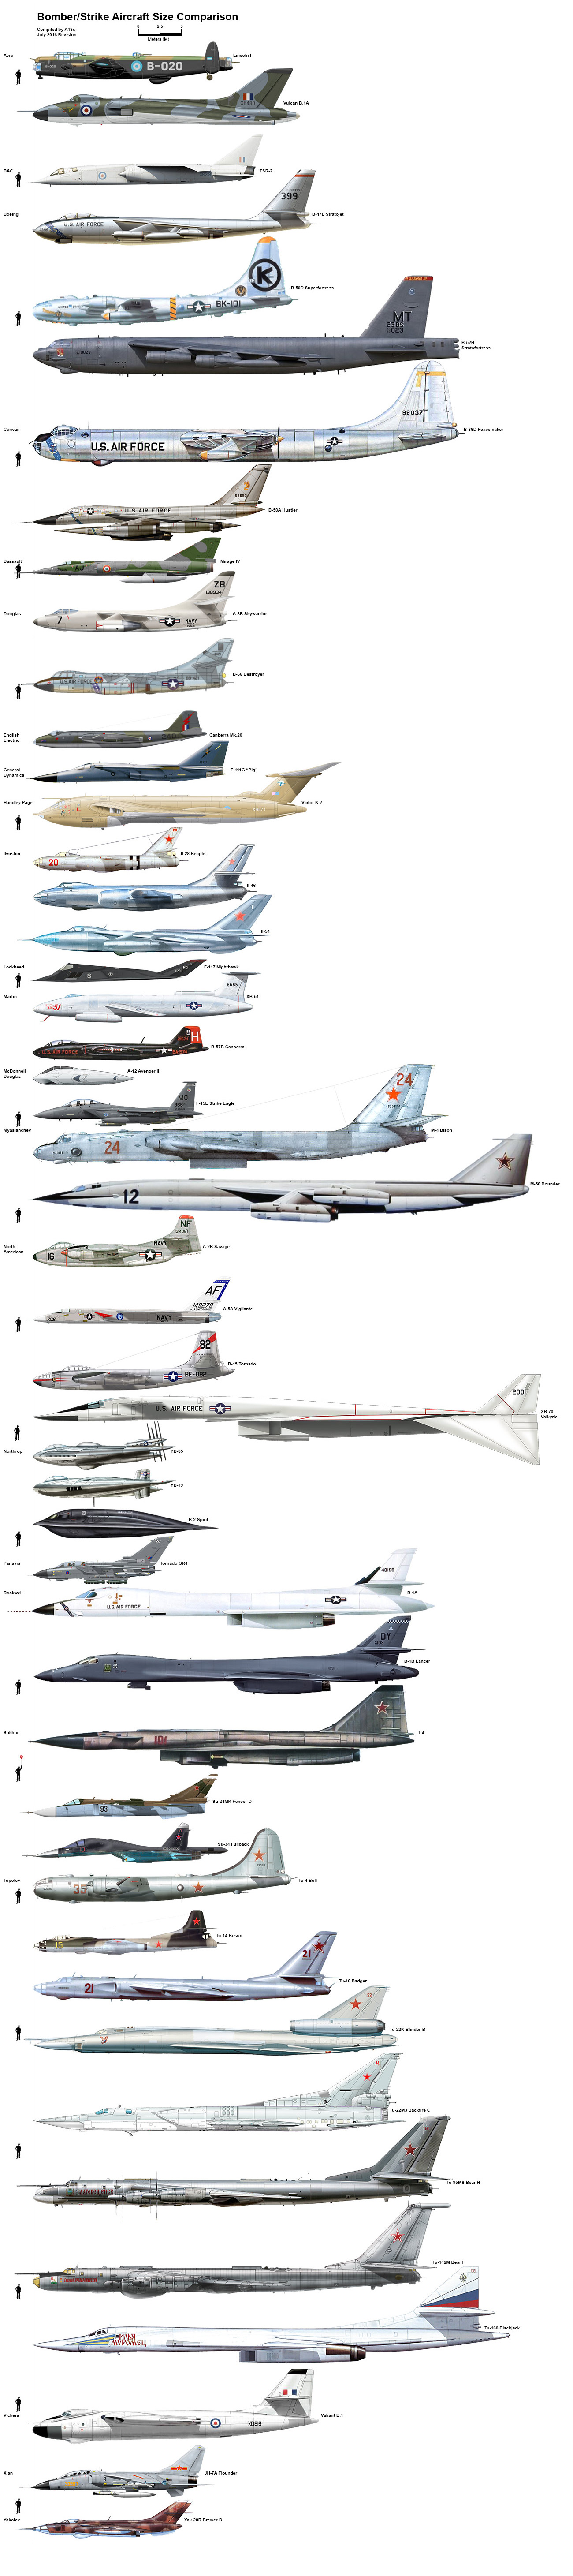 bombers.jpg